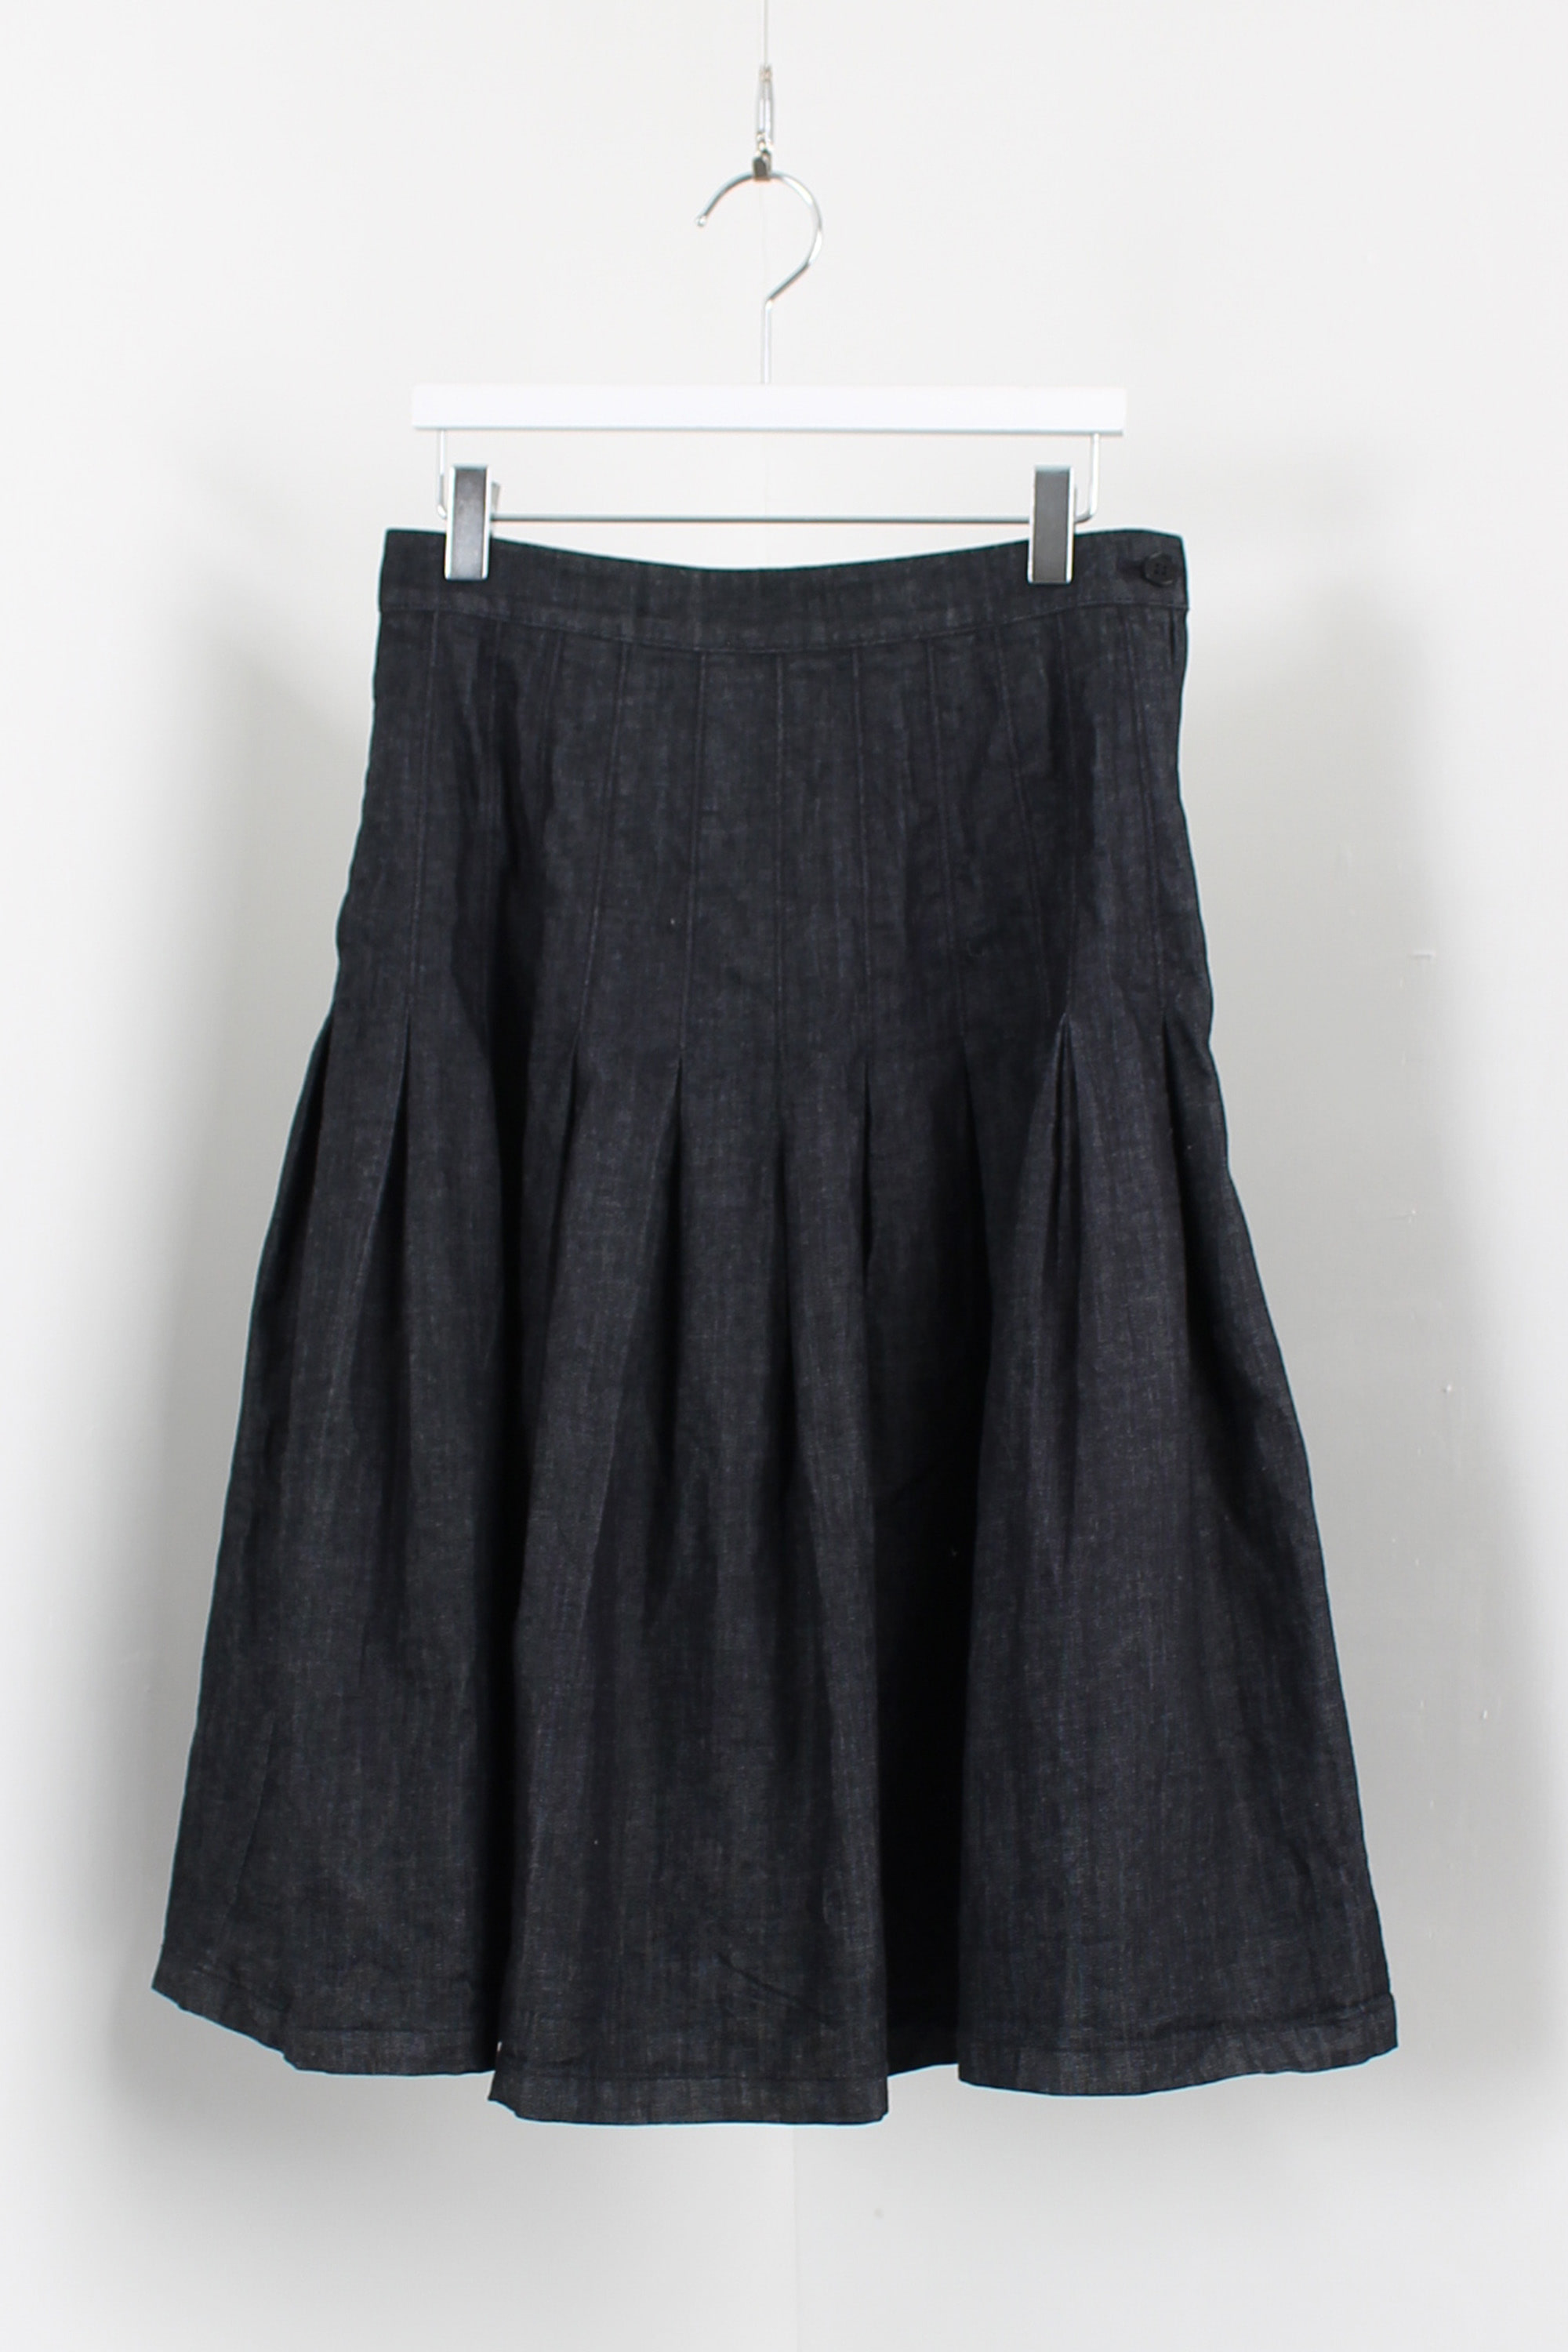 L&#039;EQUIPE YOSHIE INABA pleats skirt